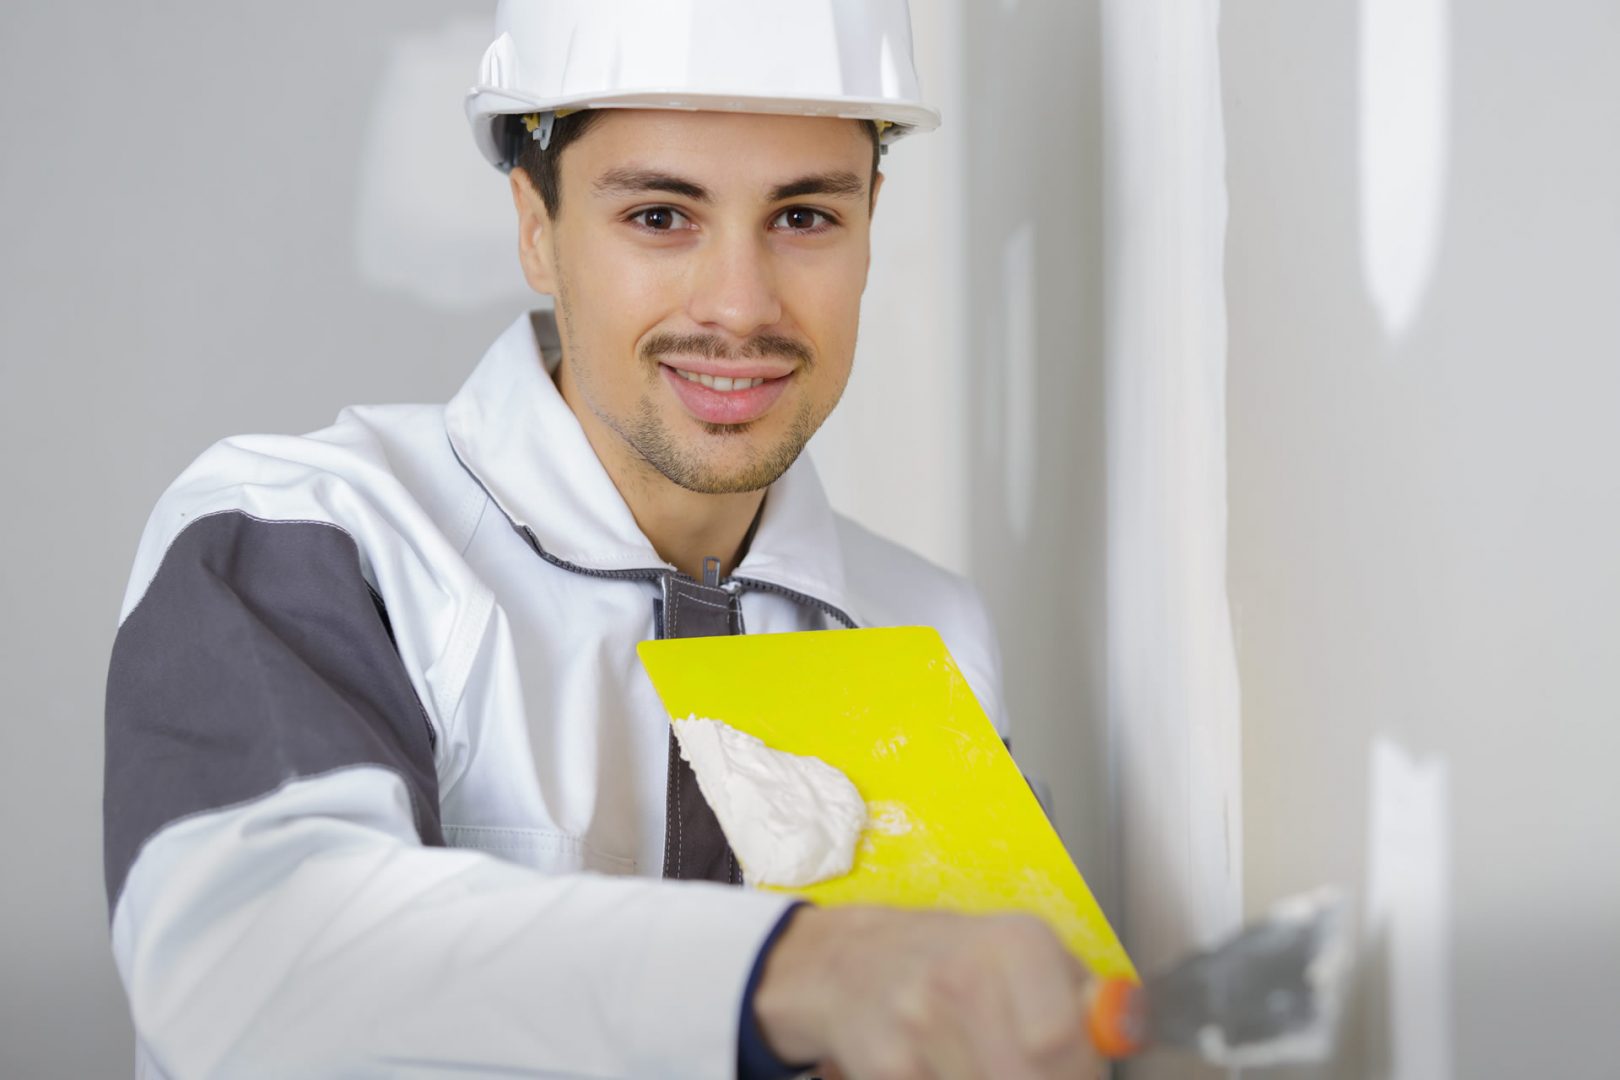 plastering 3 - Home services blog - Master Plastering & Services